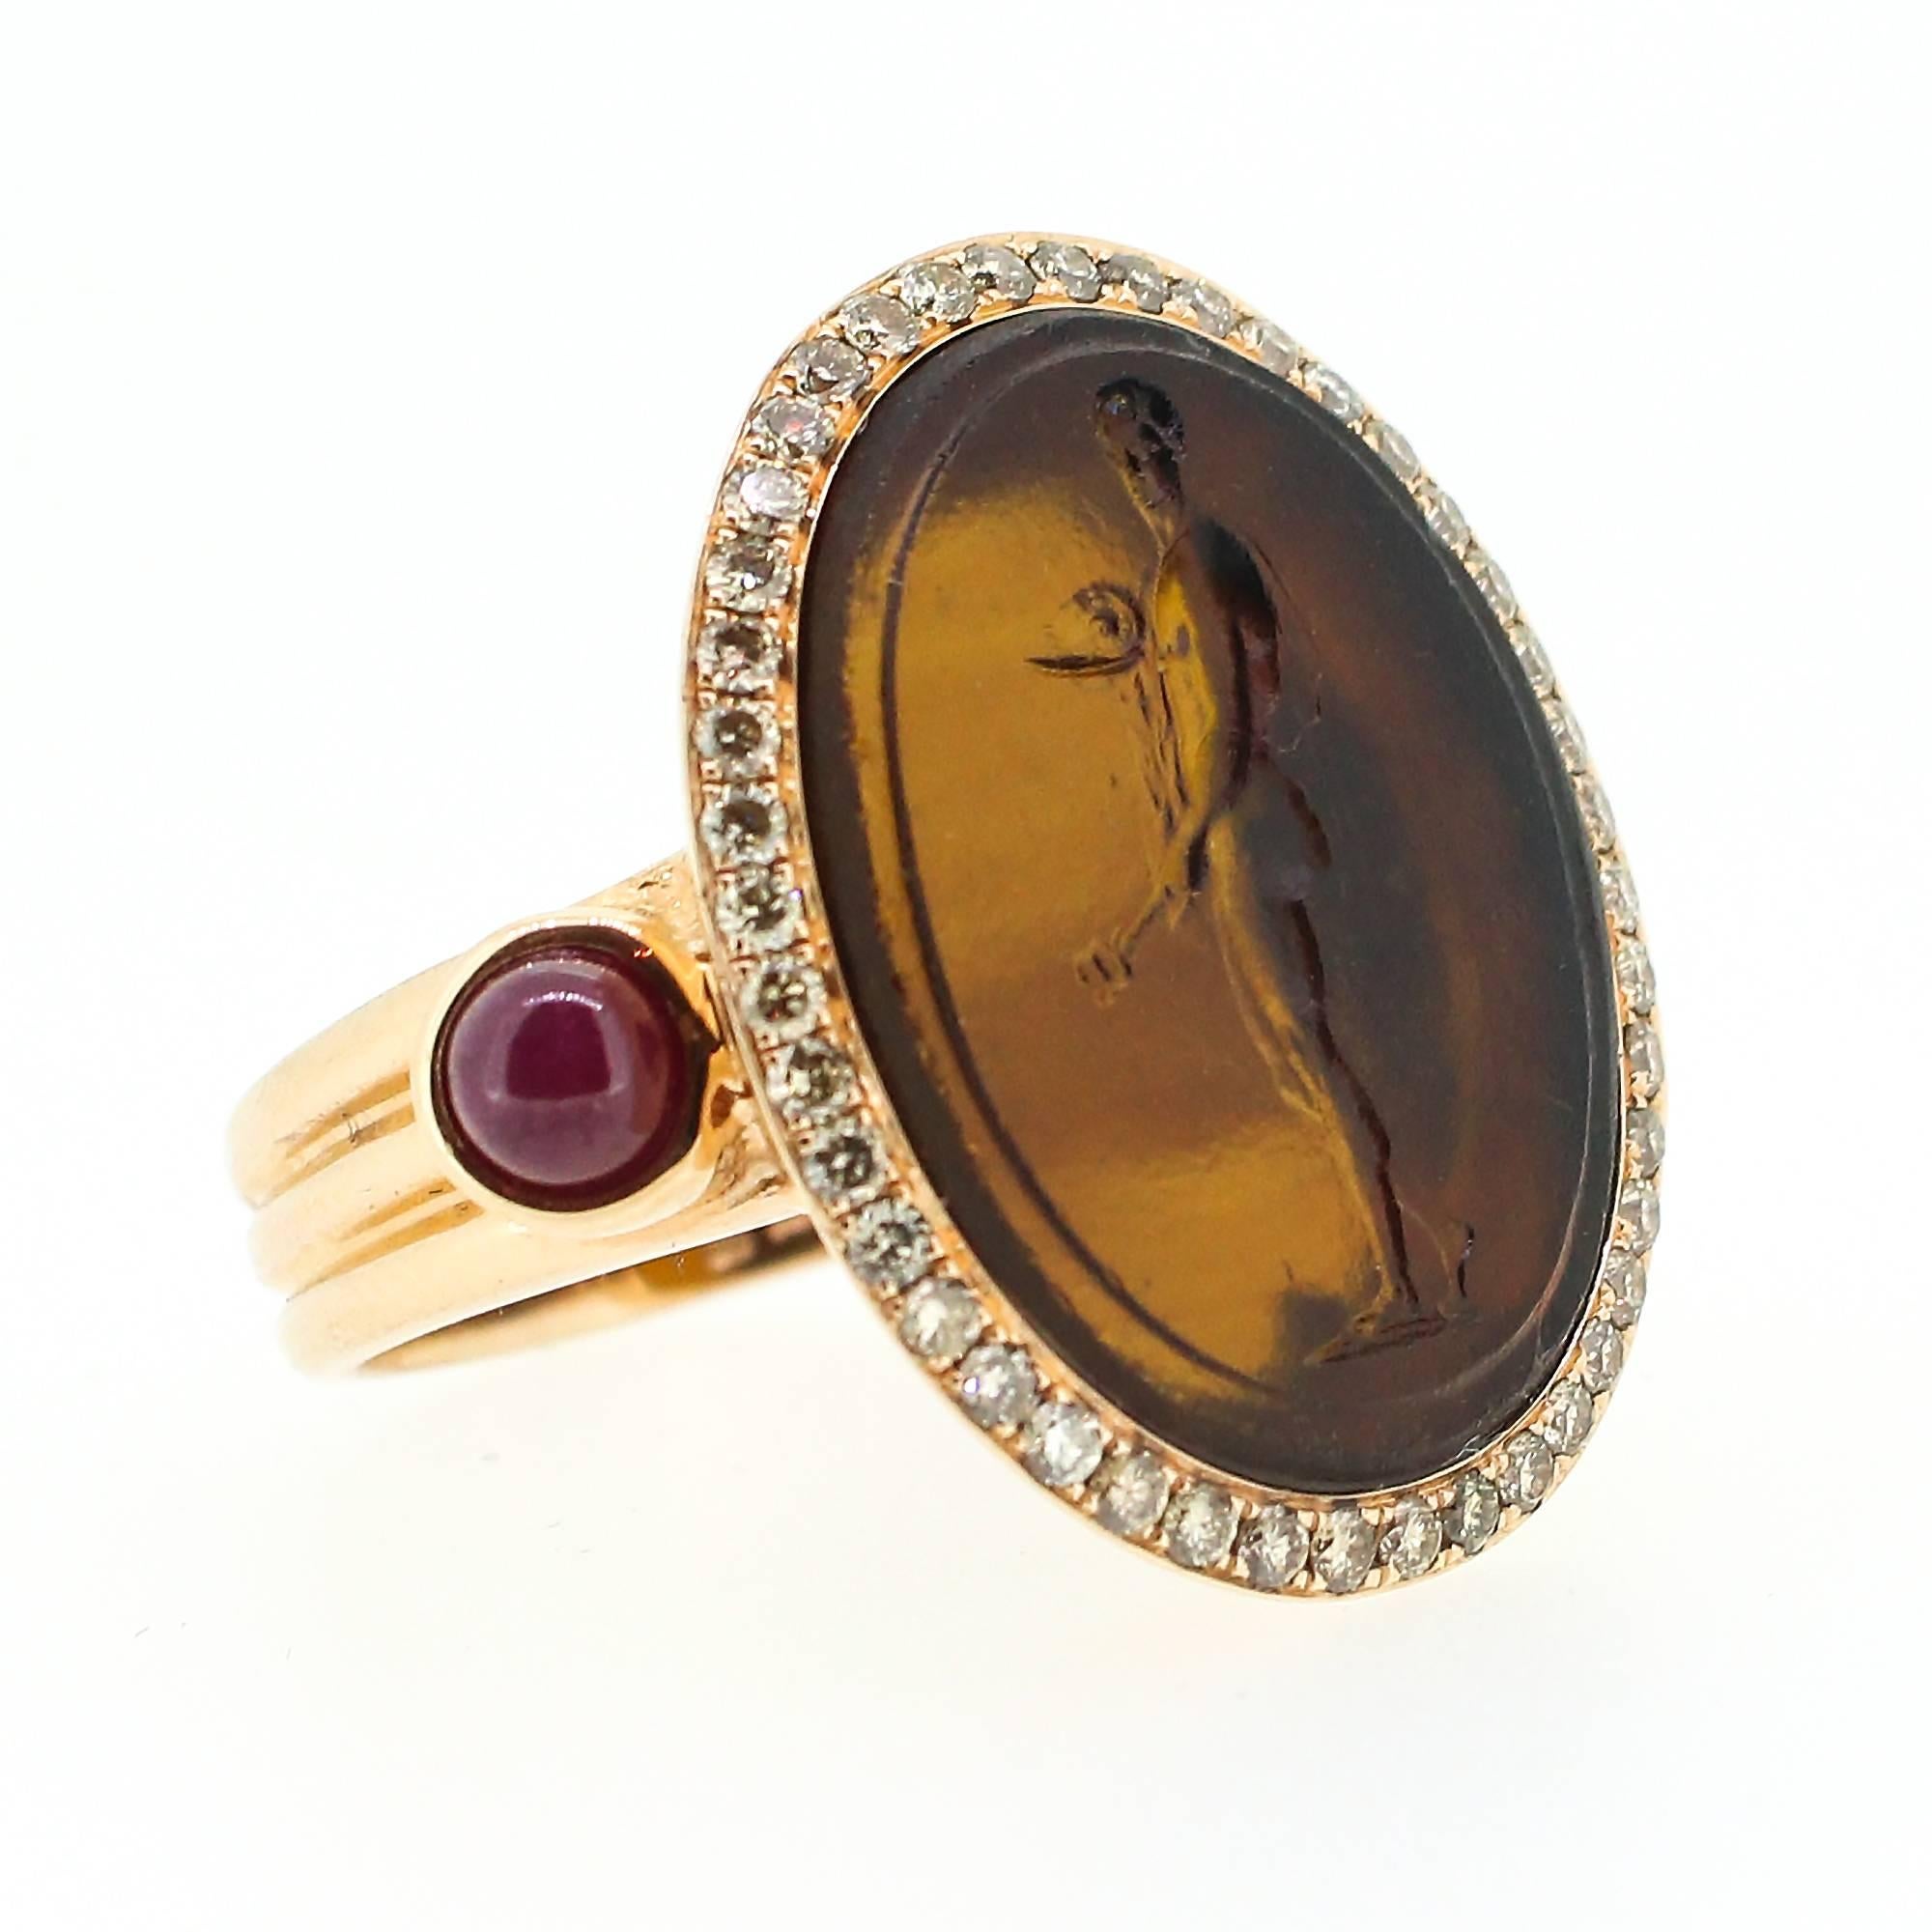 Modern Barry Brinker Rose Gold Antique Roman Intaglio Ring